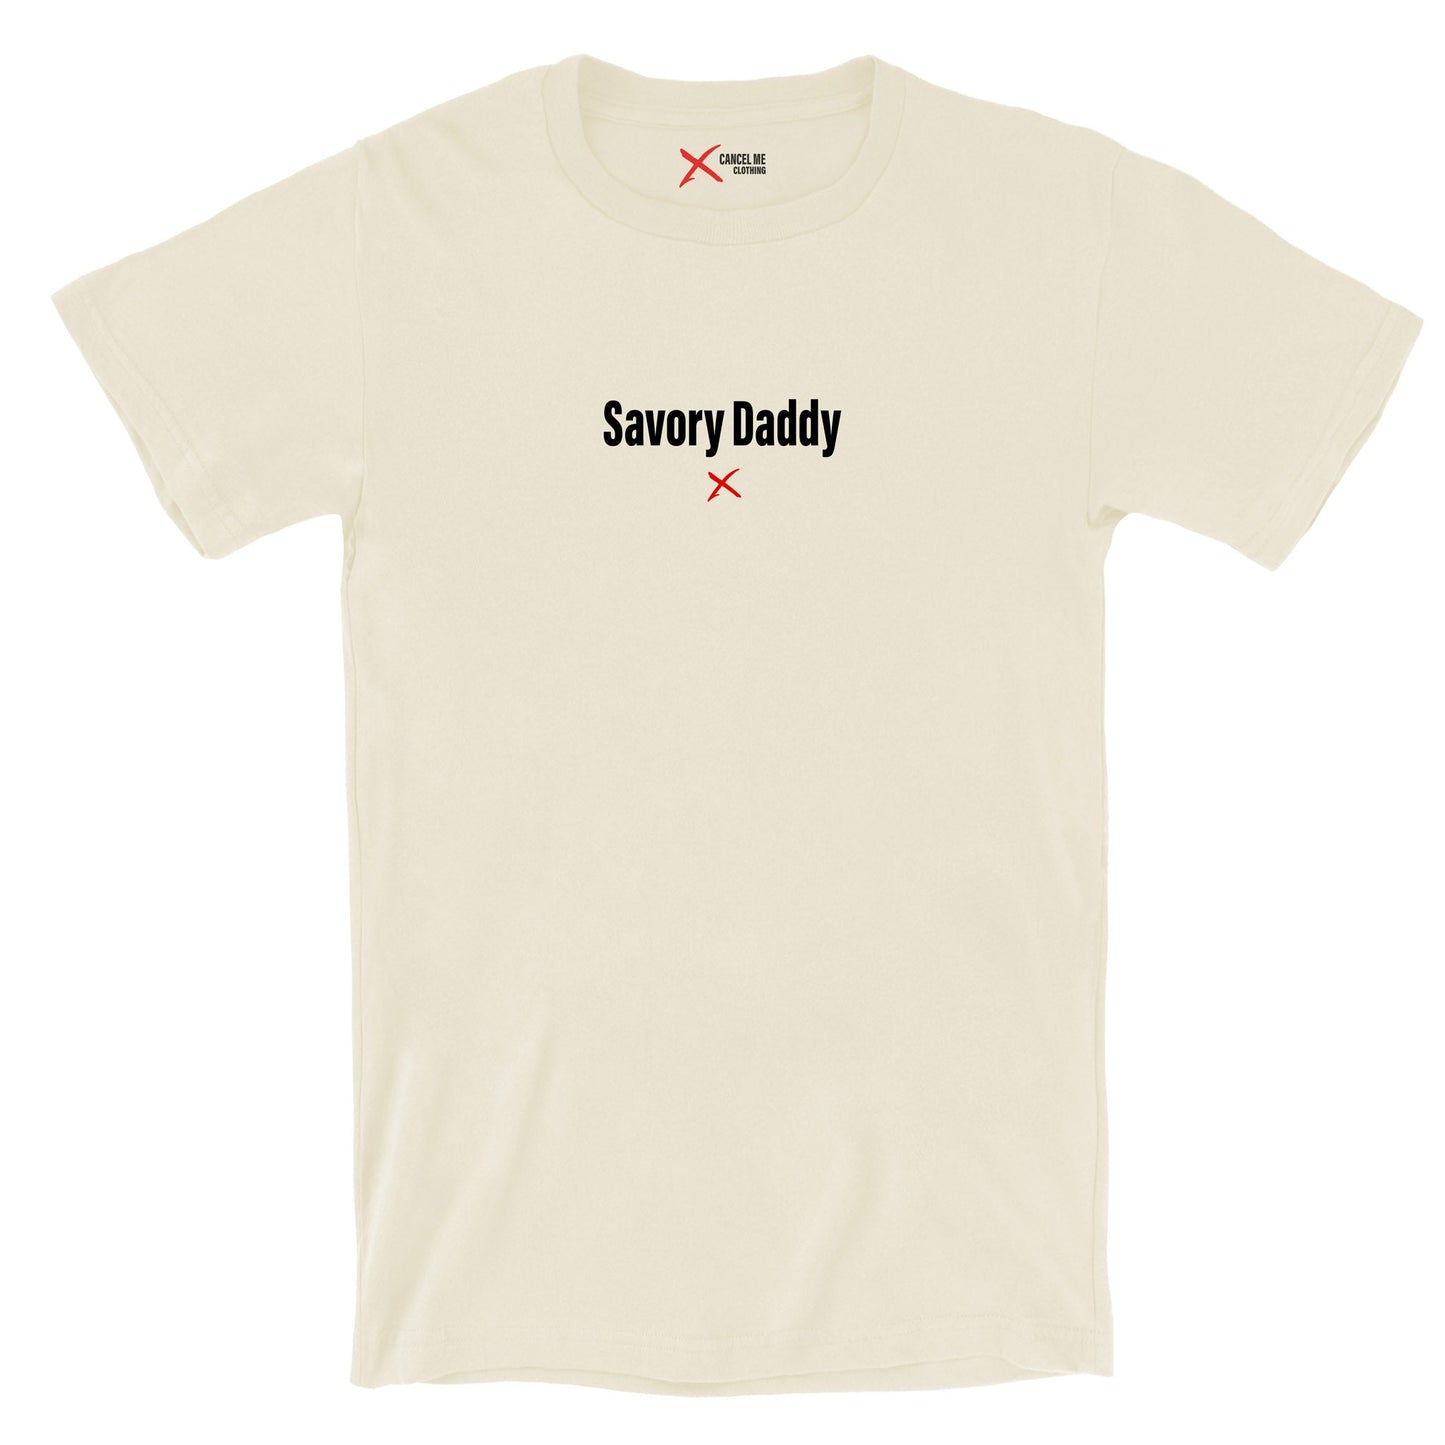 Savory Daddy - Shirt